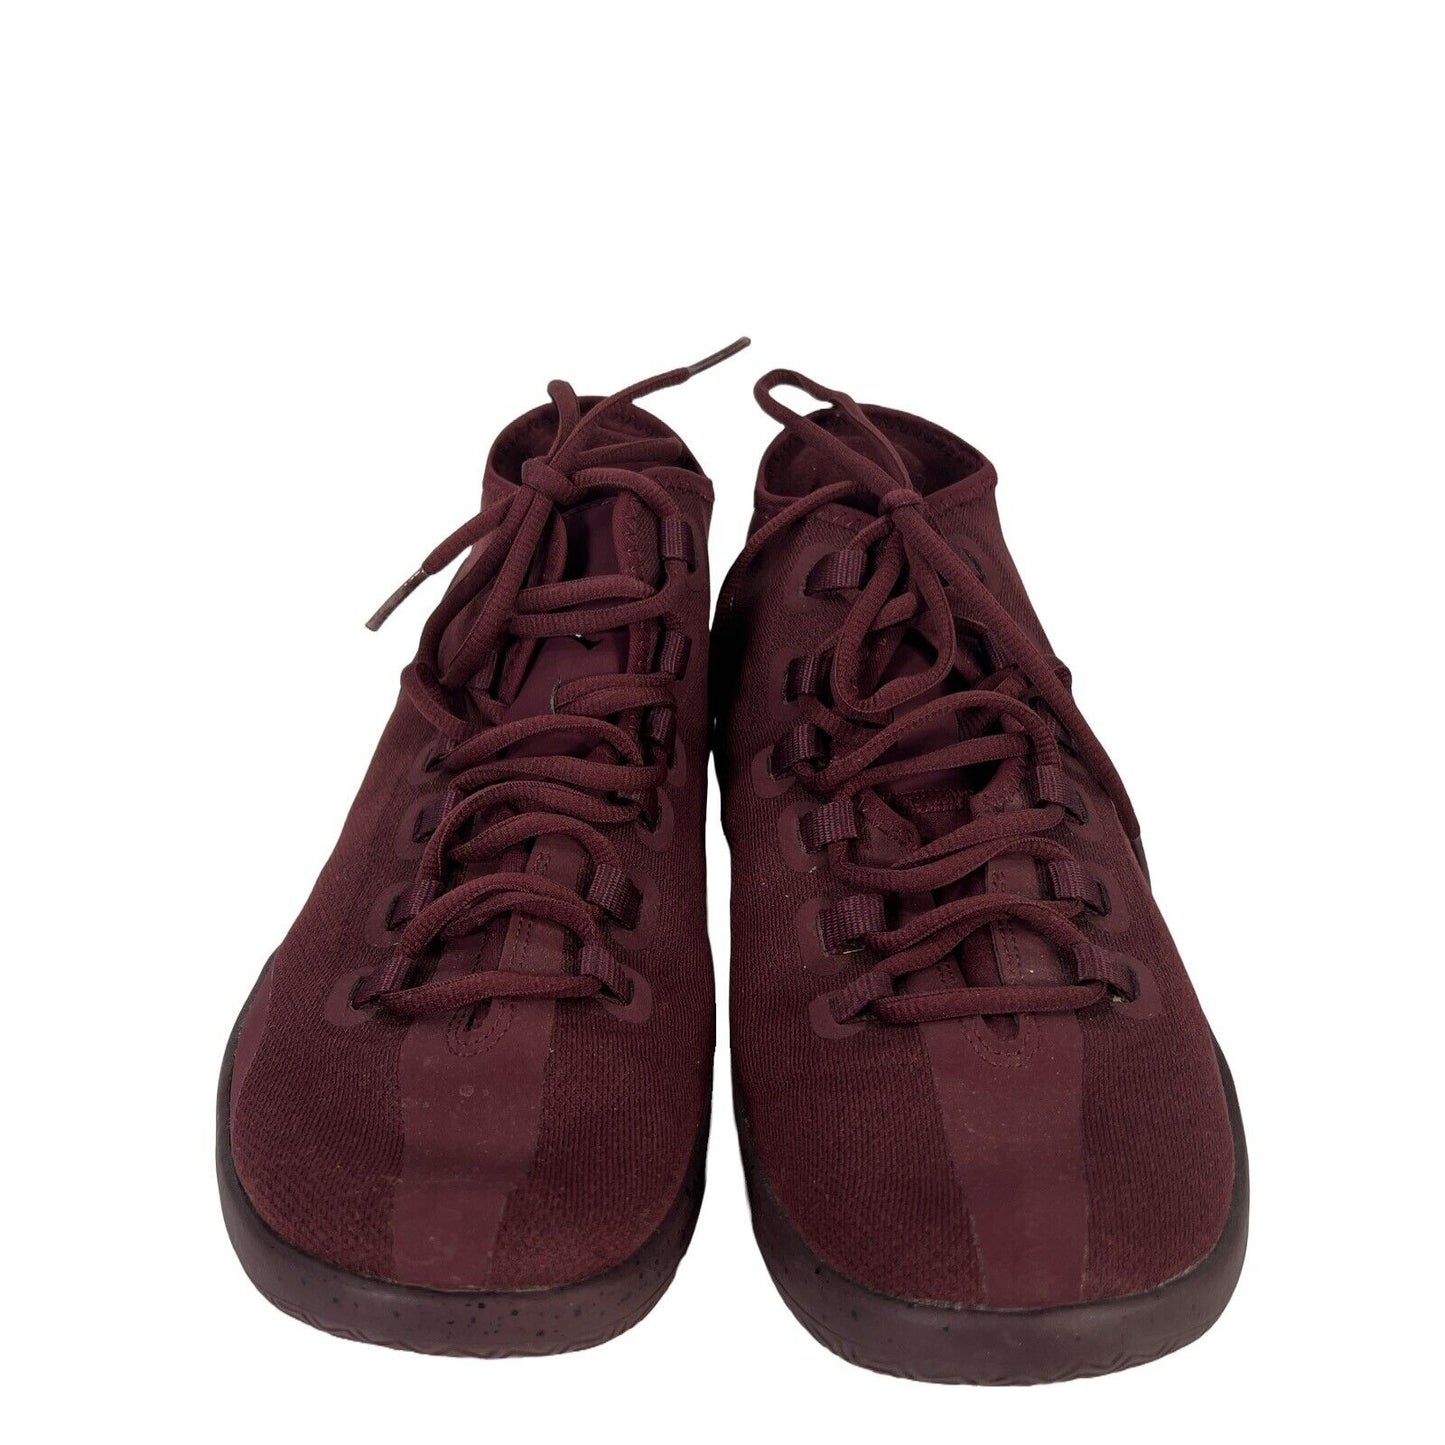 Air Jordan Men's Night Maroon Red Reveal Sneakers Shoes - 9.5